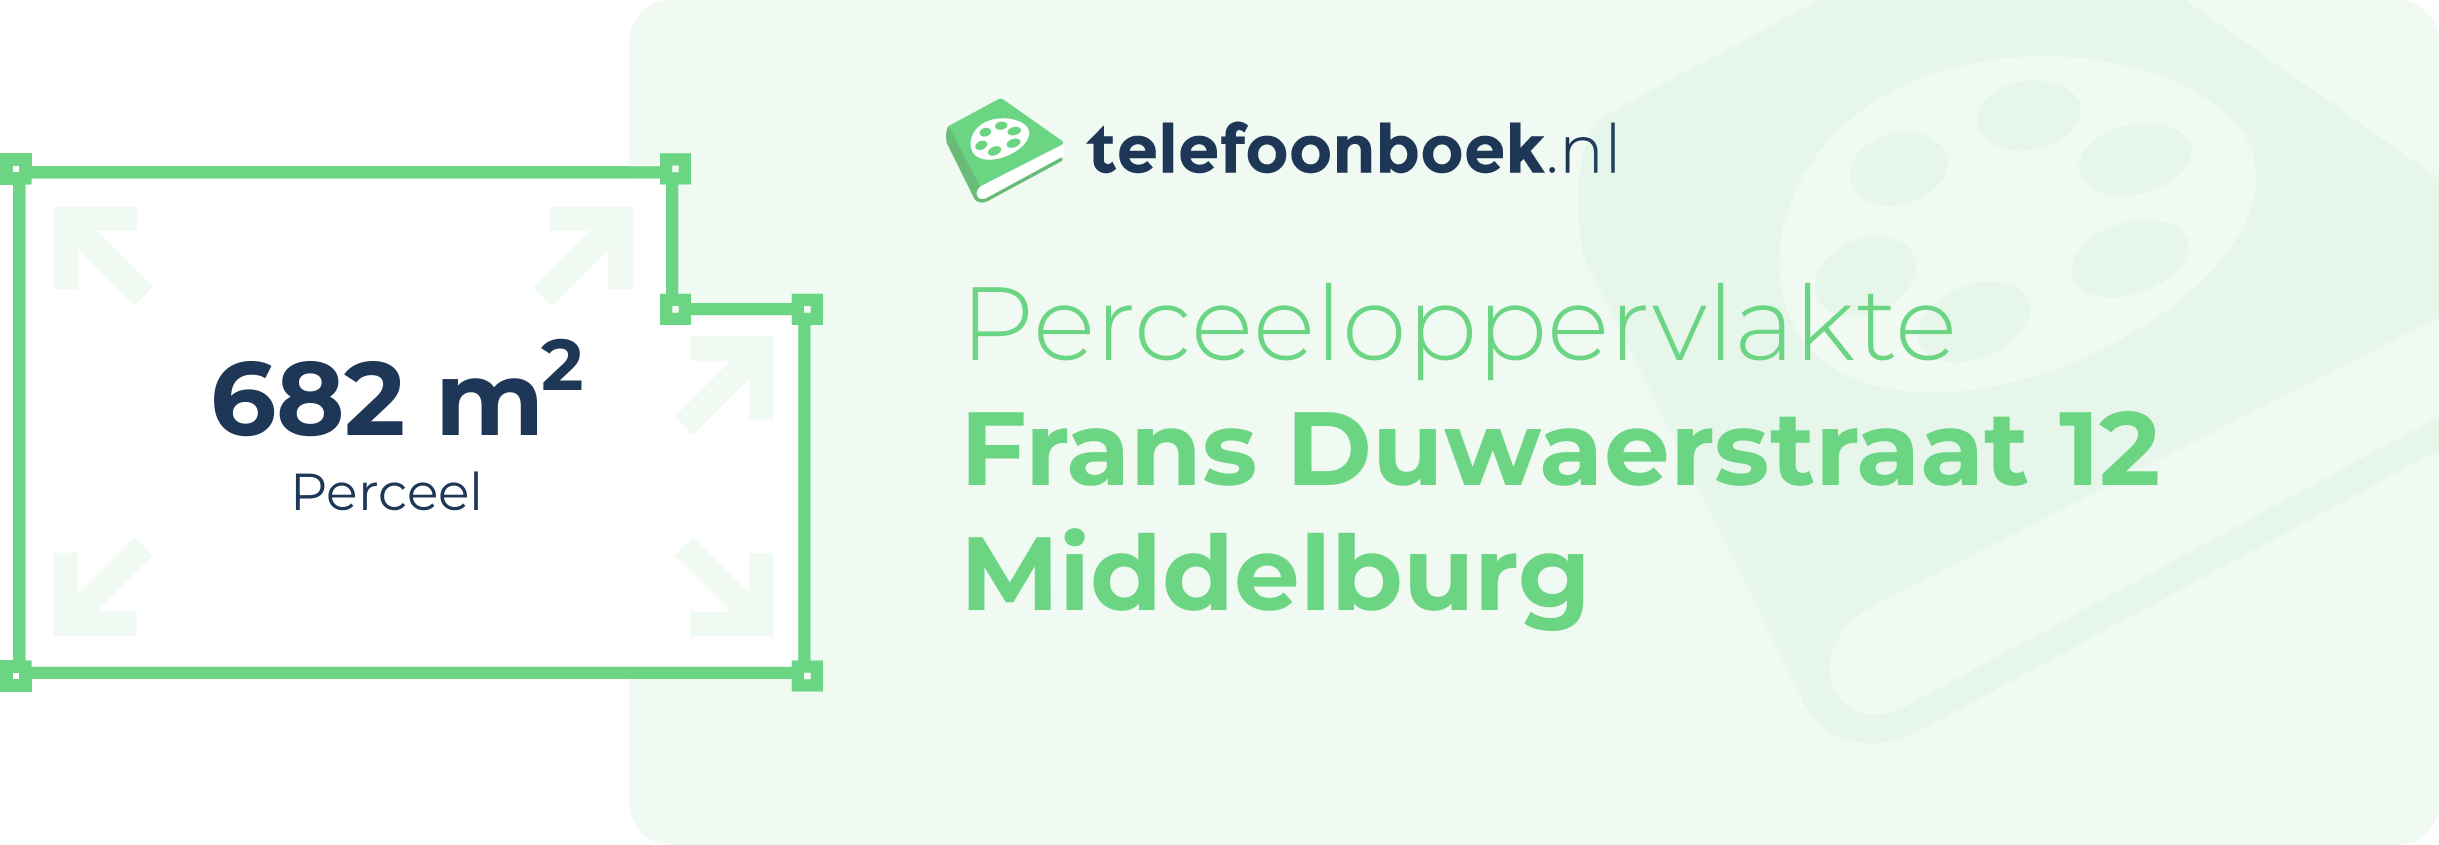 Perceeloppervlakte Frans Duwaerstraat 12 Middelburg